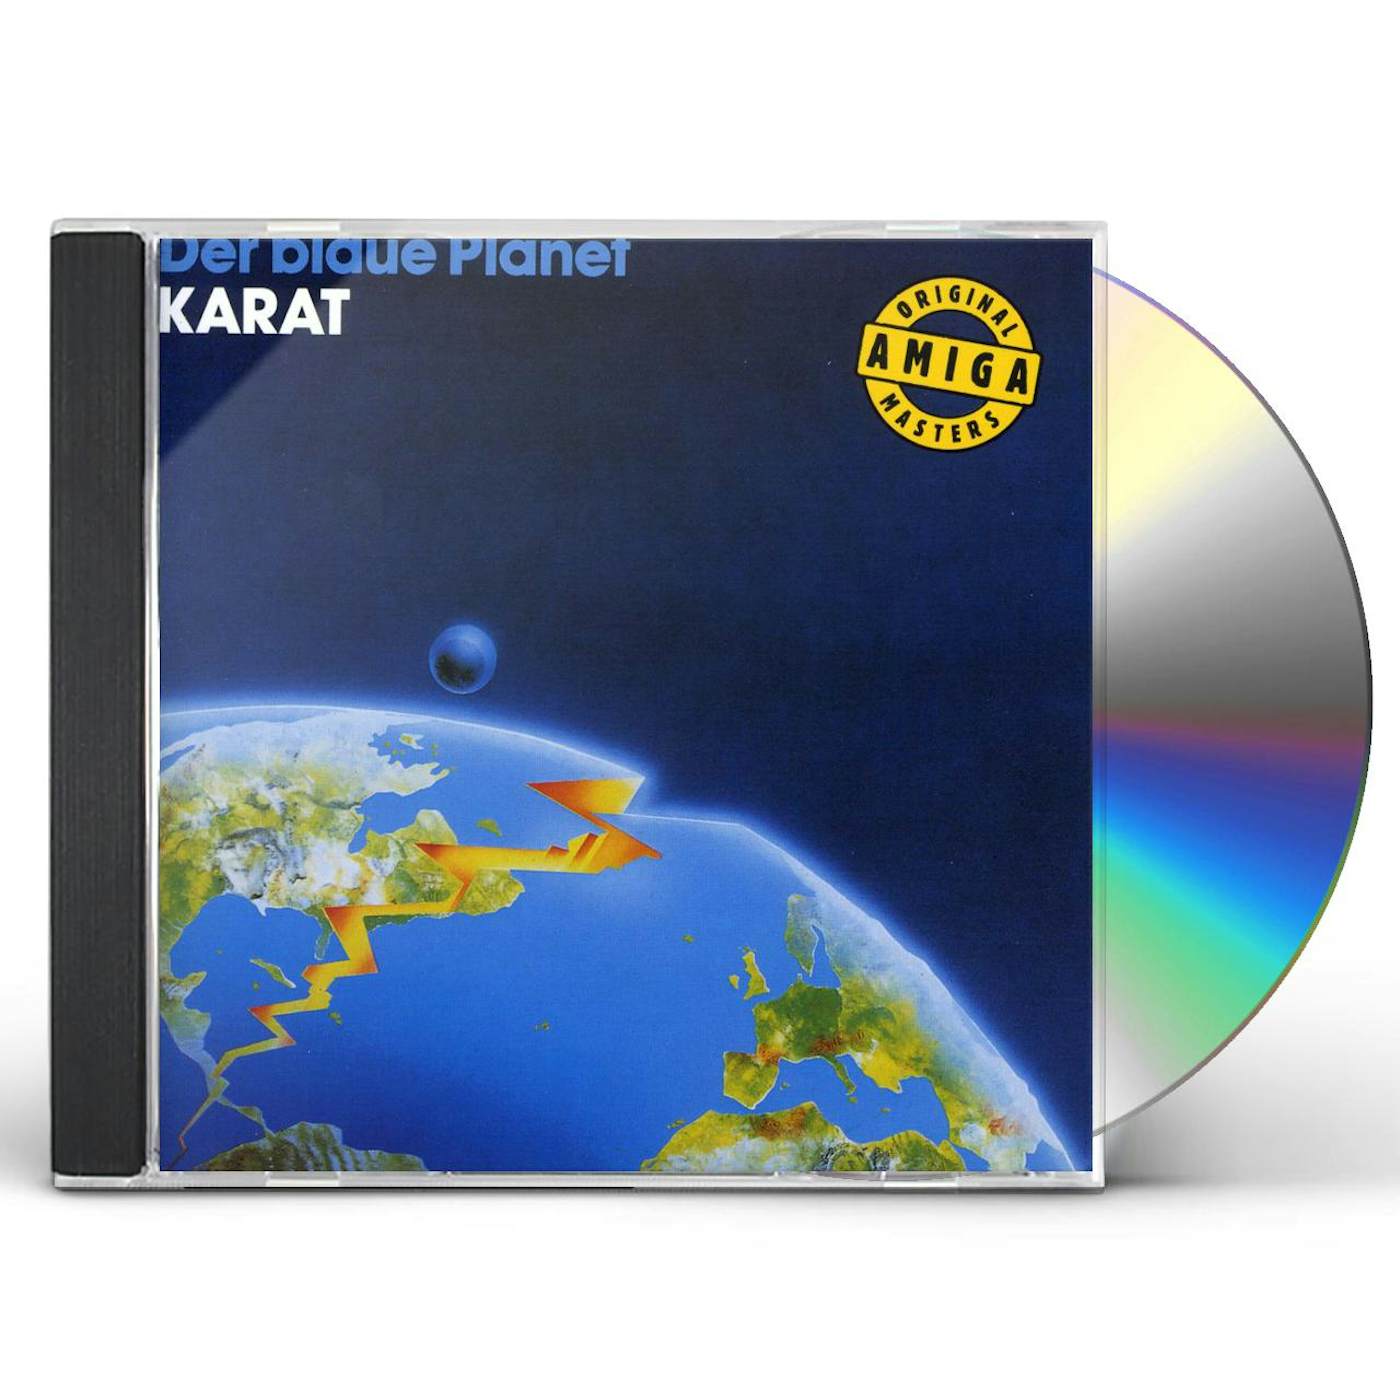 Karat DER BLAUE PLANET CD